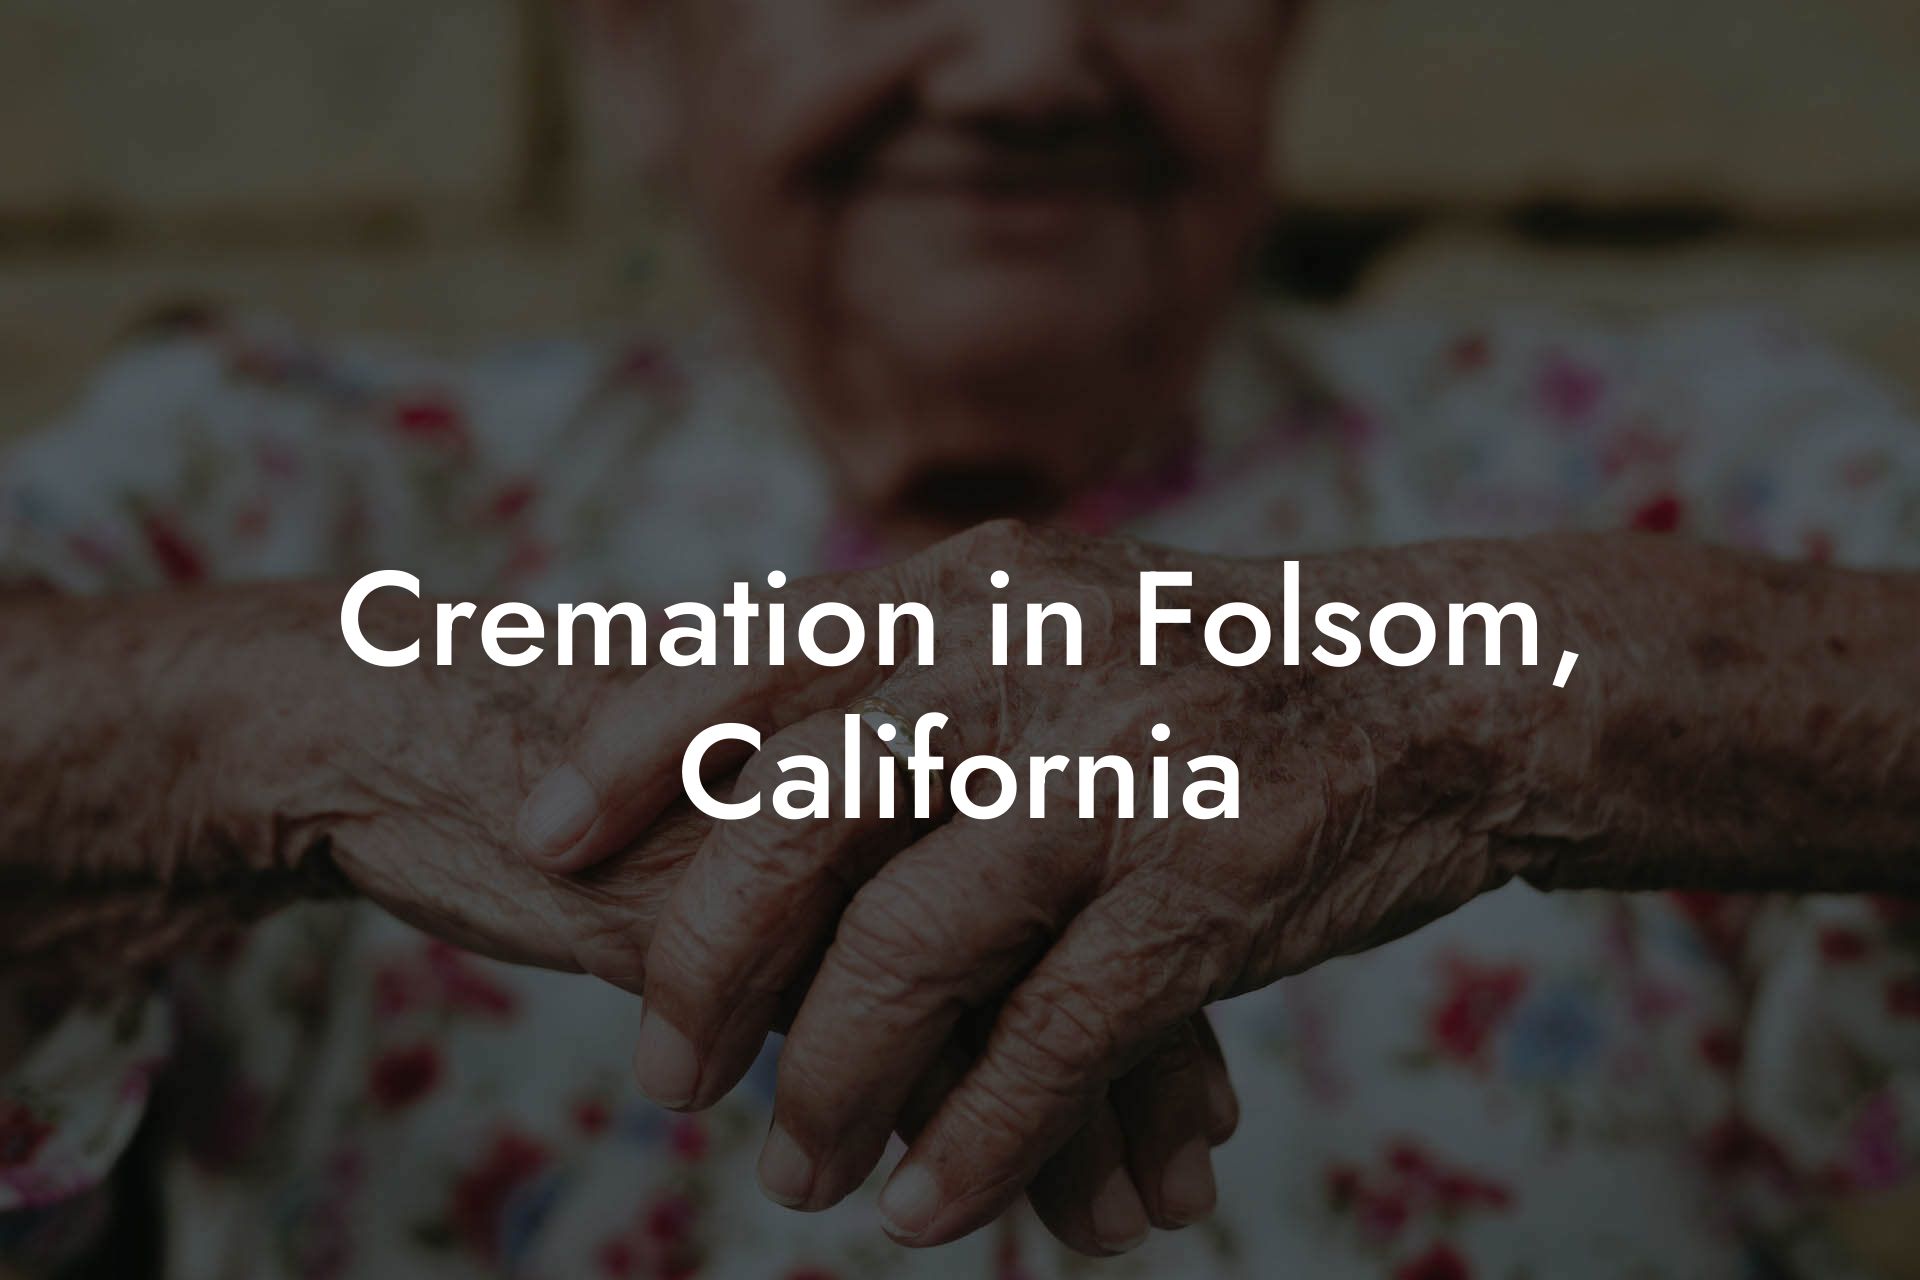 Cremation in Folsom, California